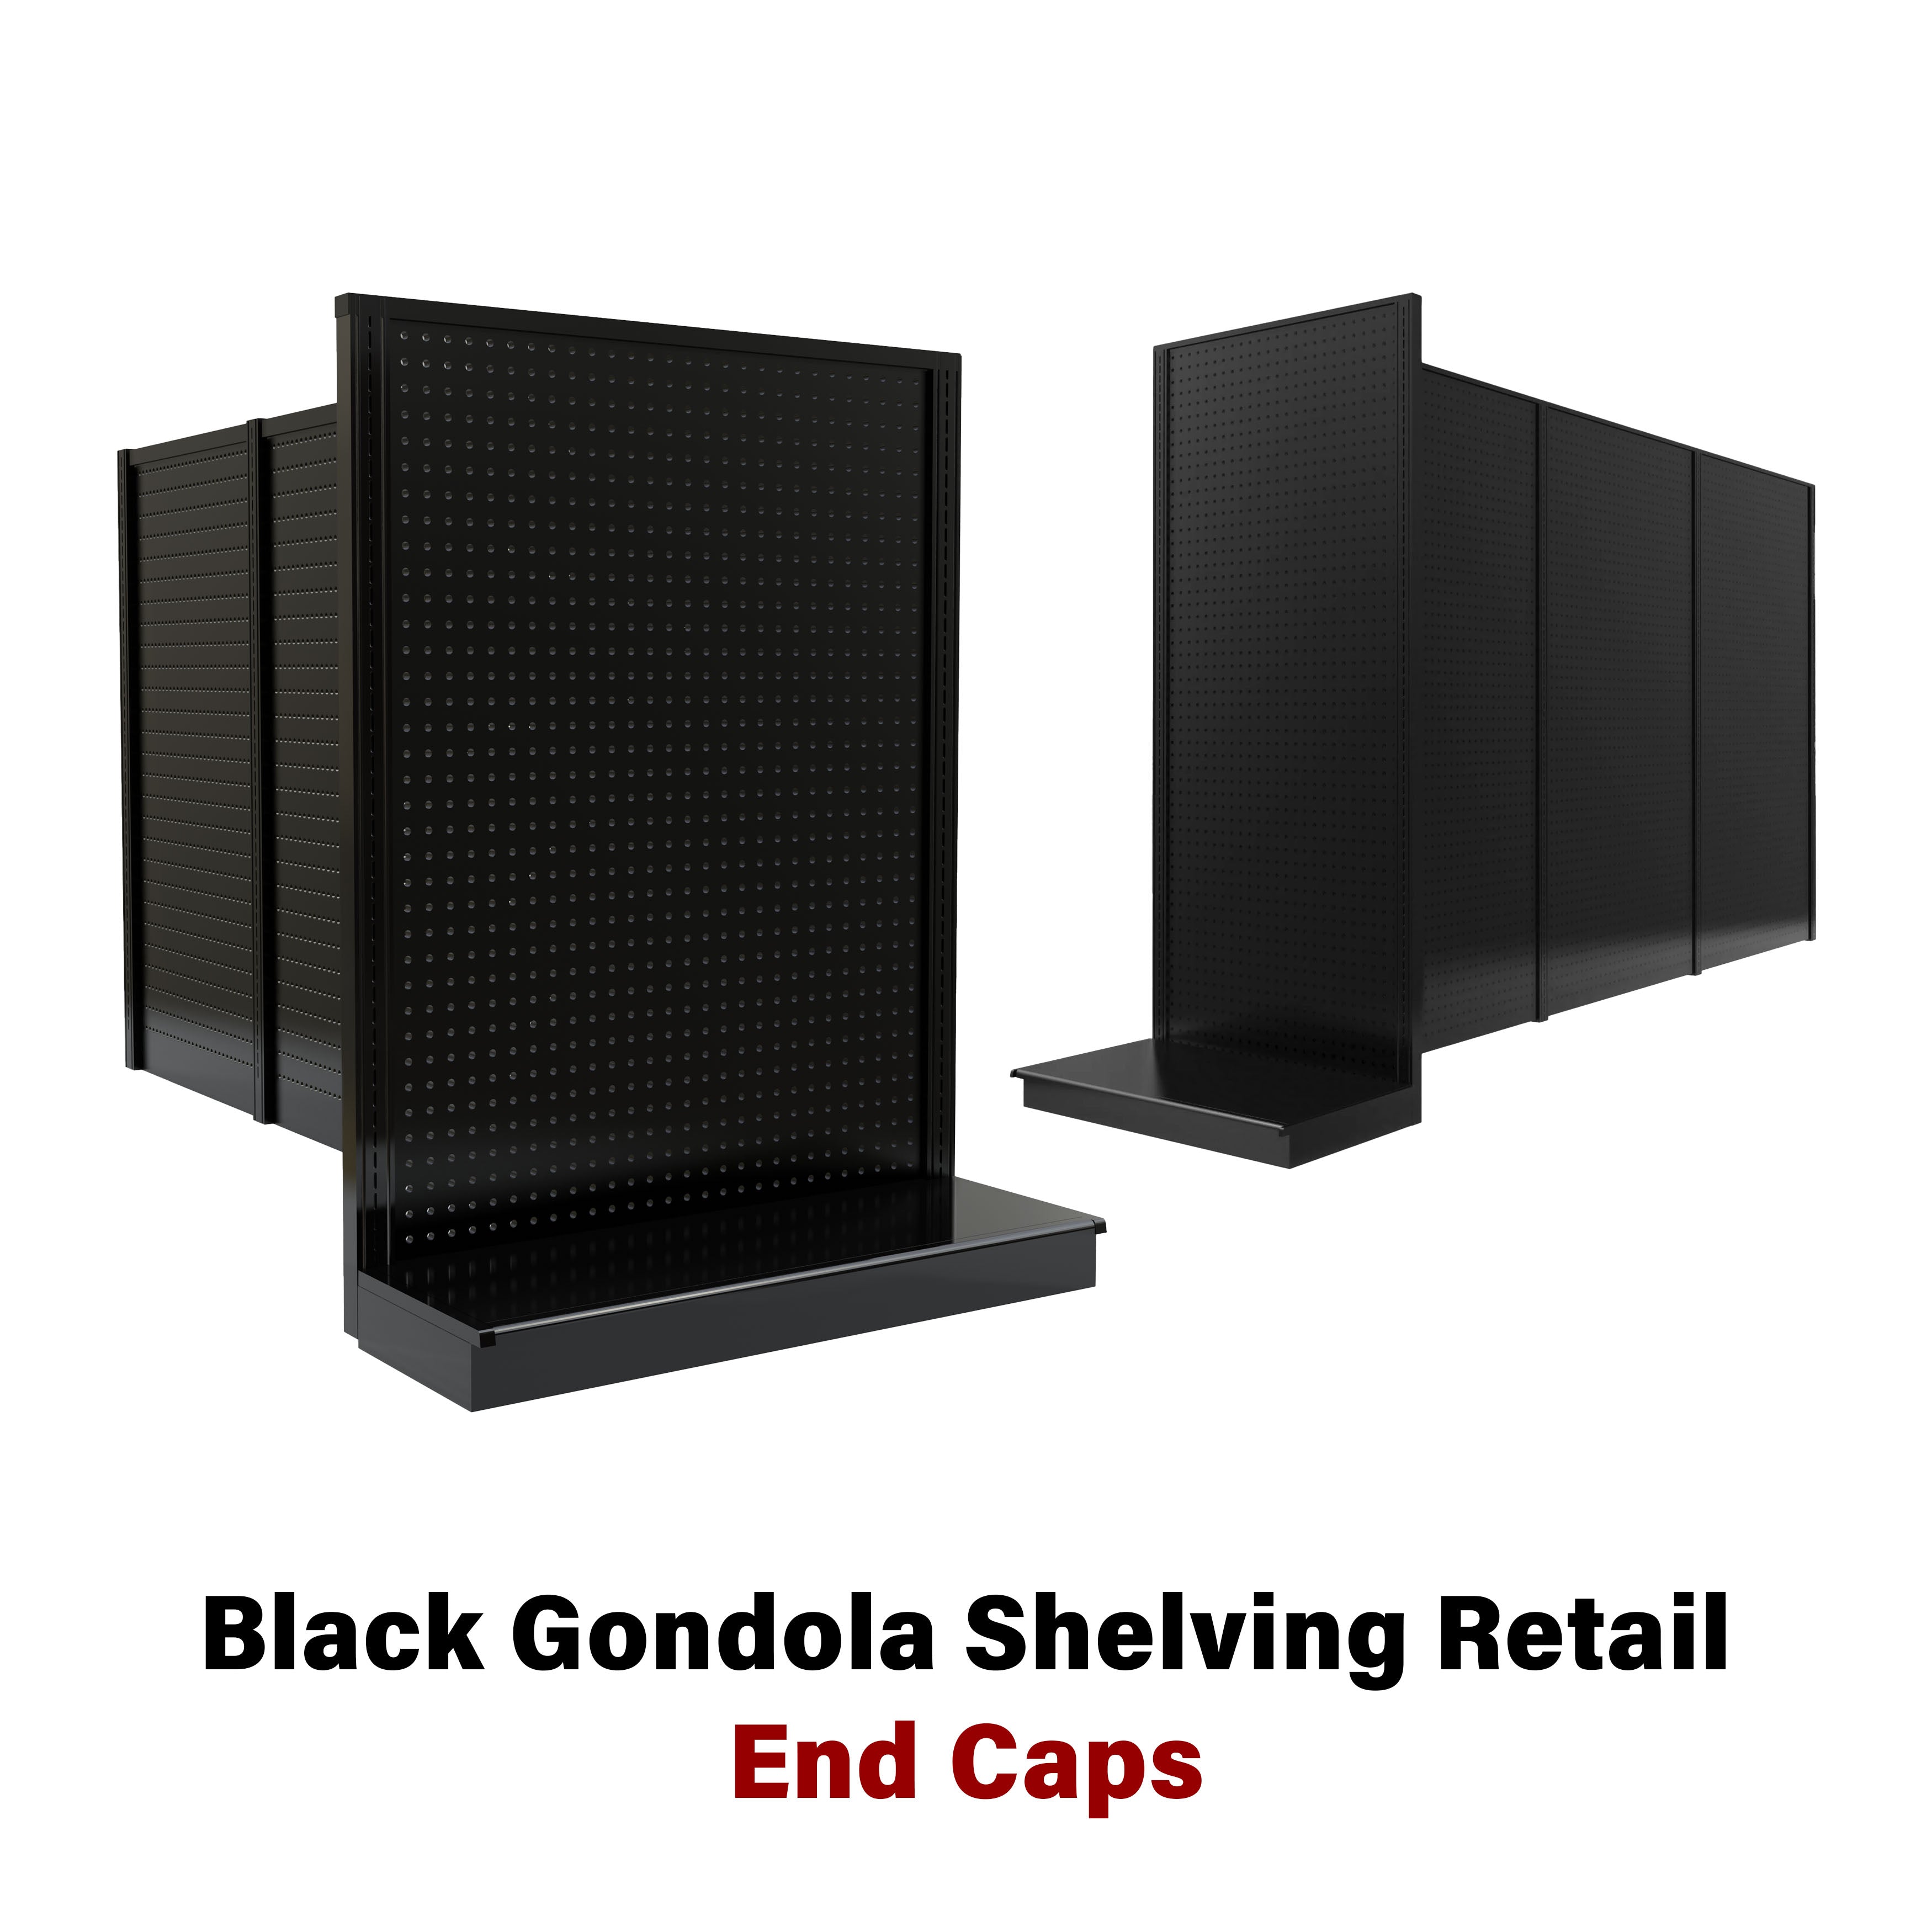 Black Gondola Shelving Retail End Caps